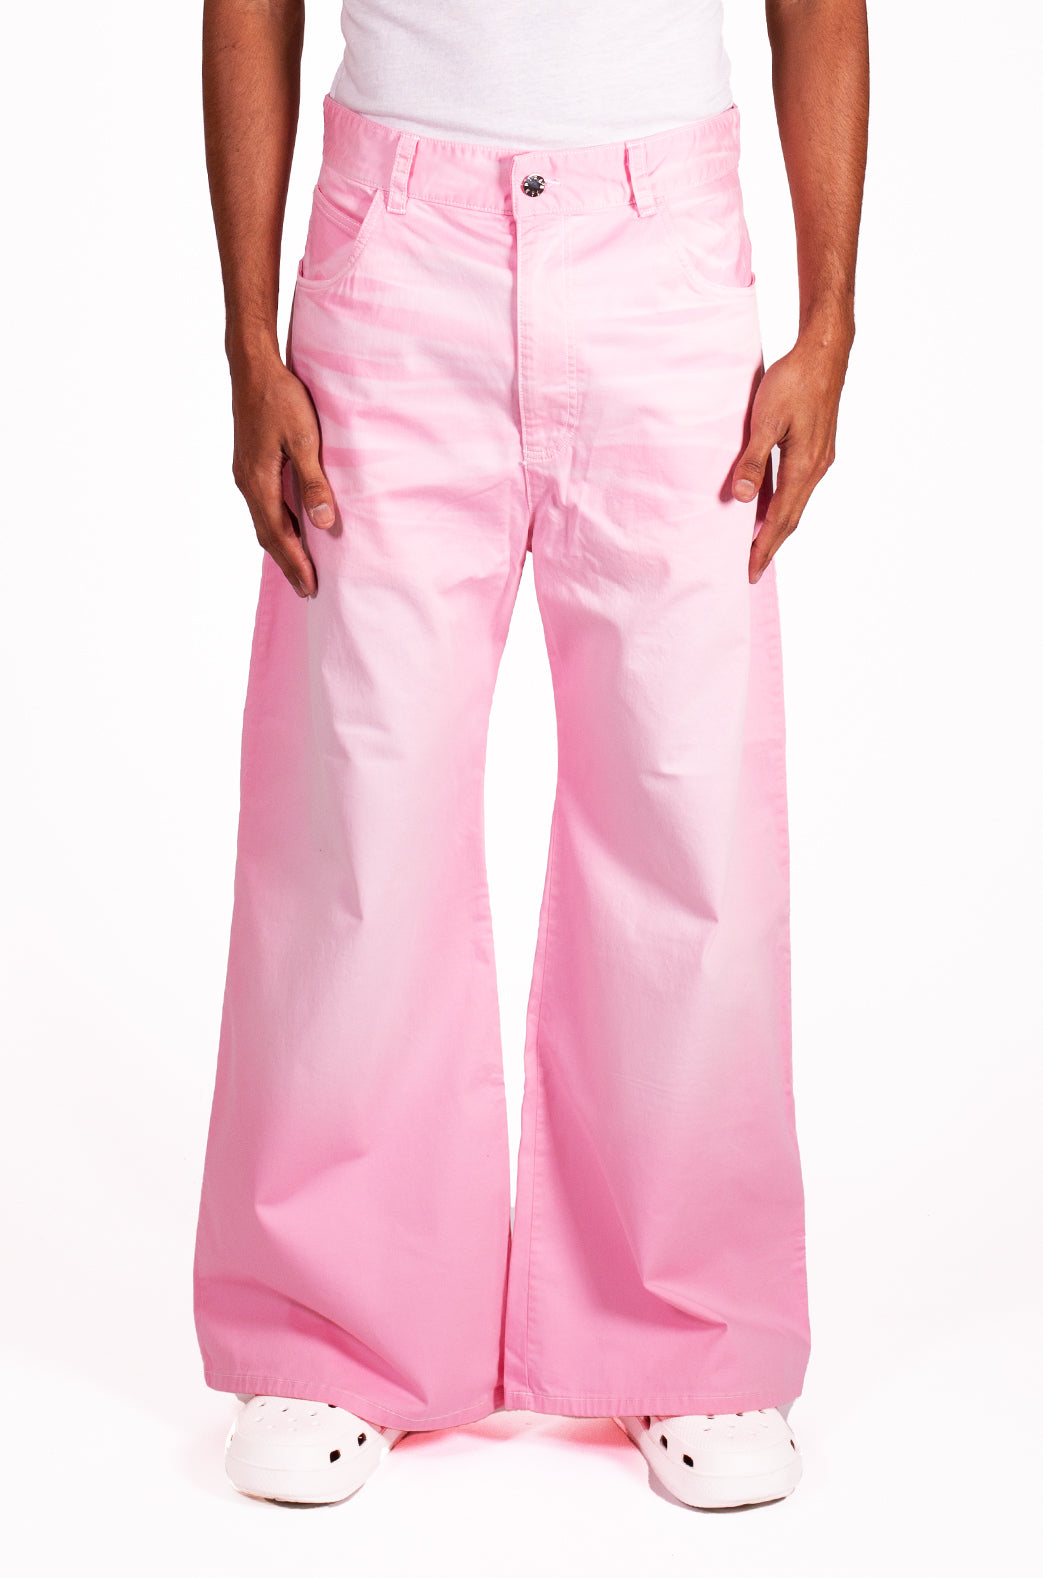 Dusty Pink Jeans